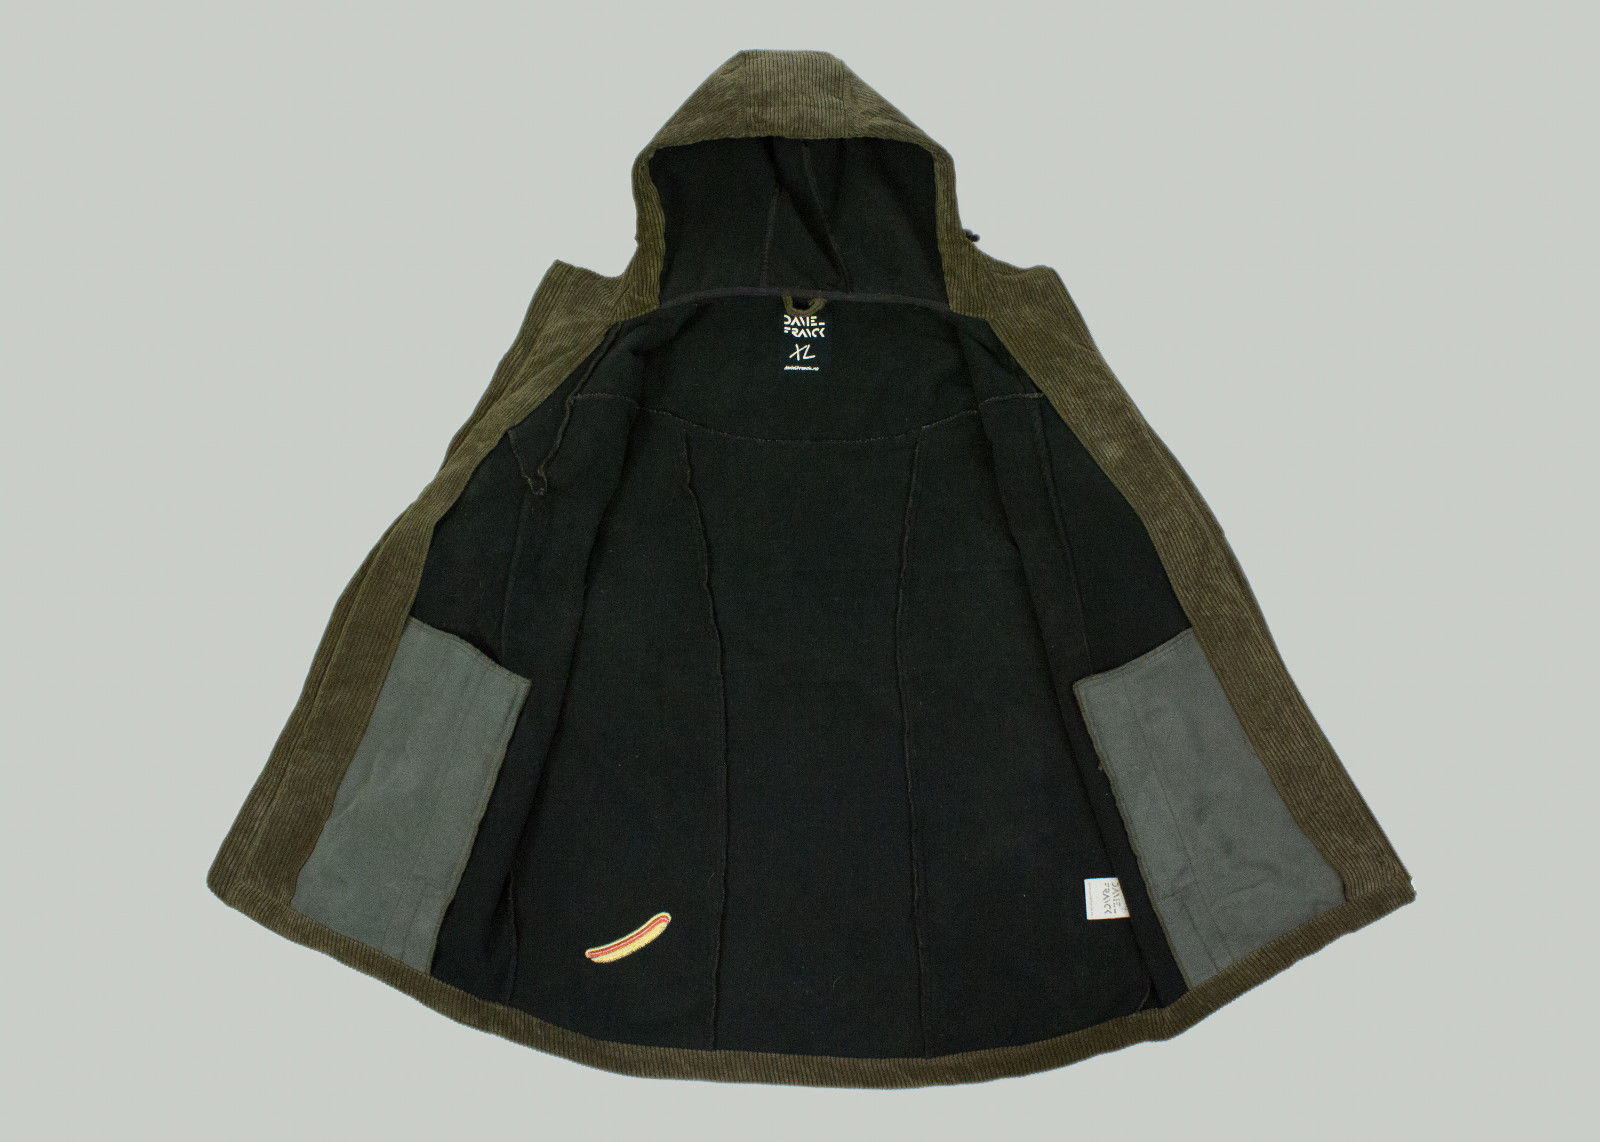 DANIEL FRANCK Snowboarder's Corduroy Shell Jacket Coat, XL - secondfirst